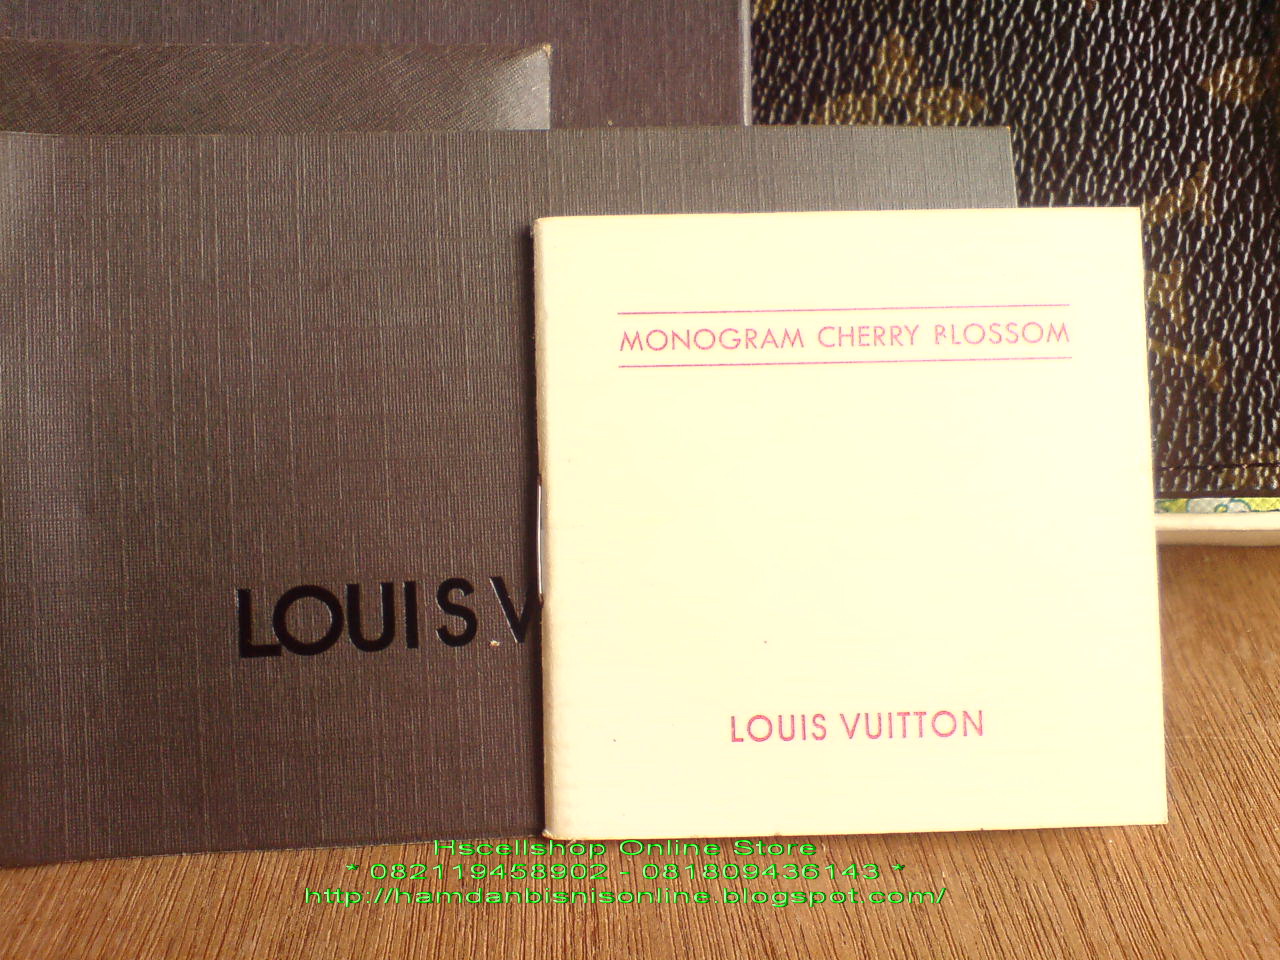 Harga Hand Bag Louis Vuitton kode DW18 | hscellshop